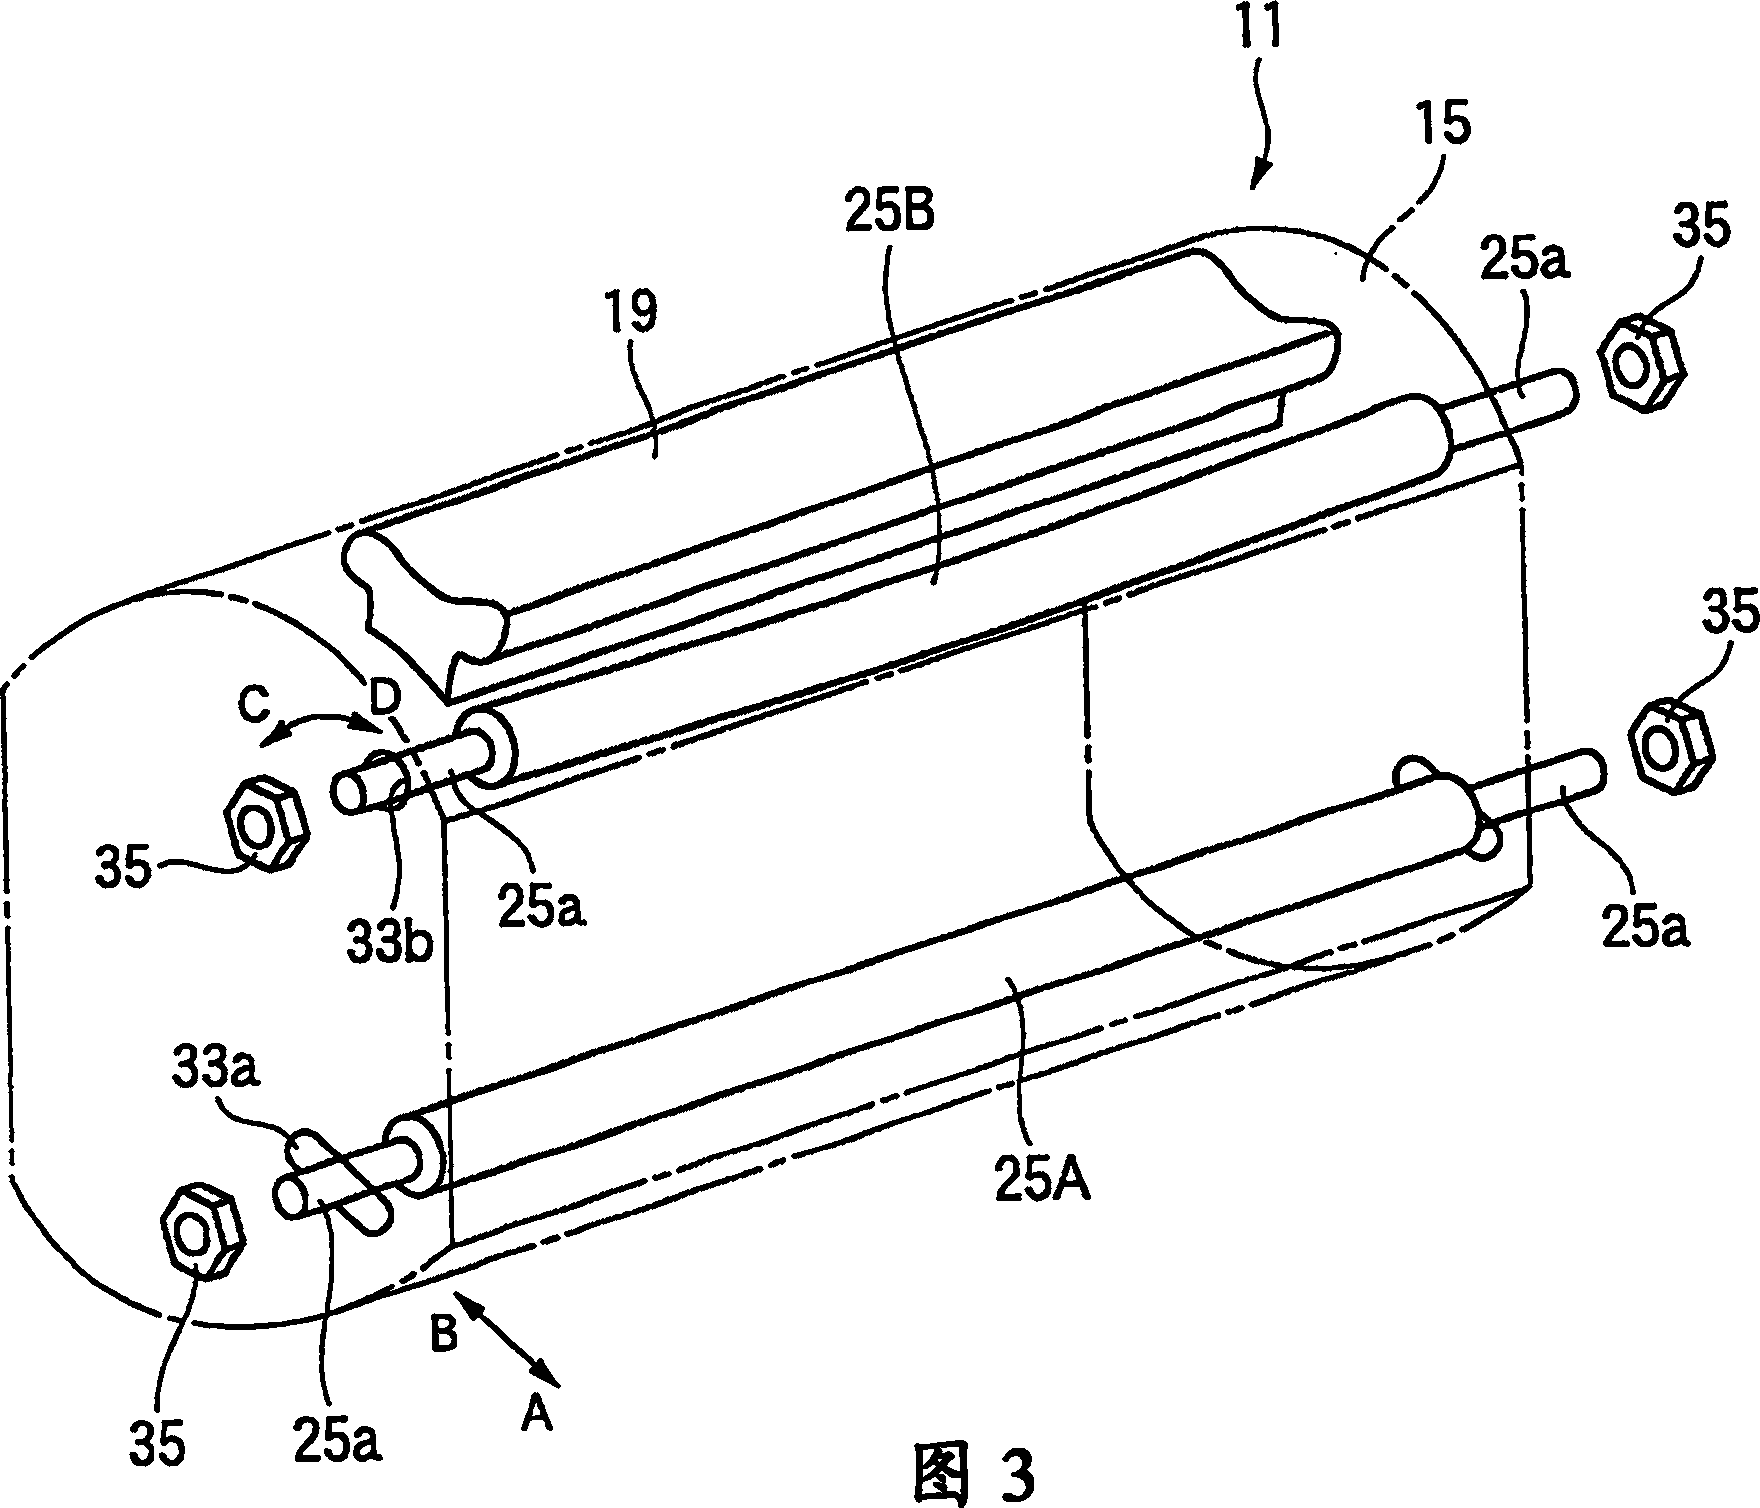 Shoe press mechanism of paper machine